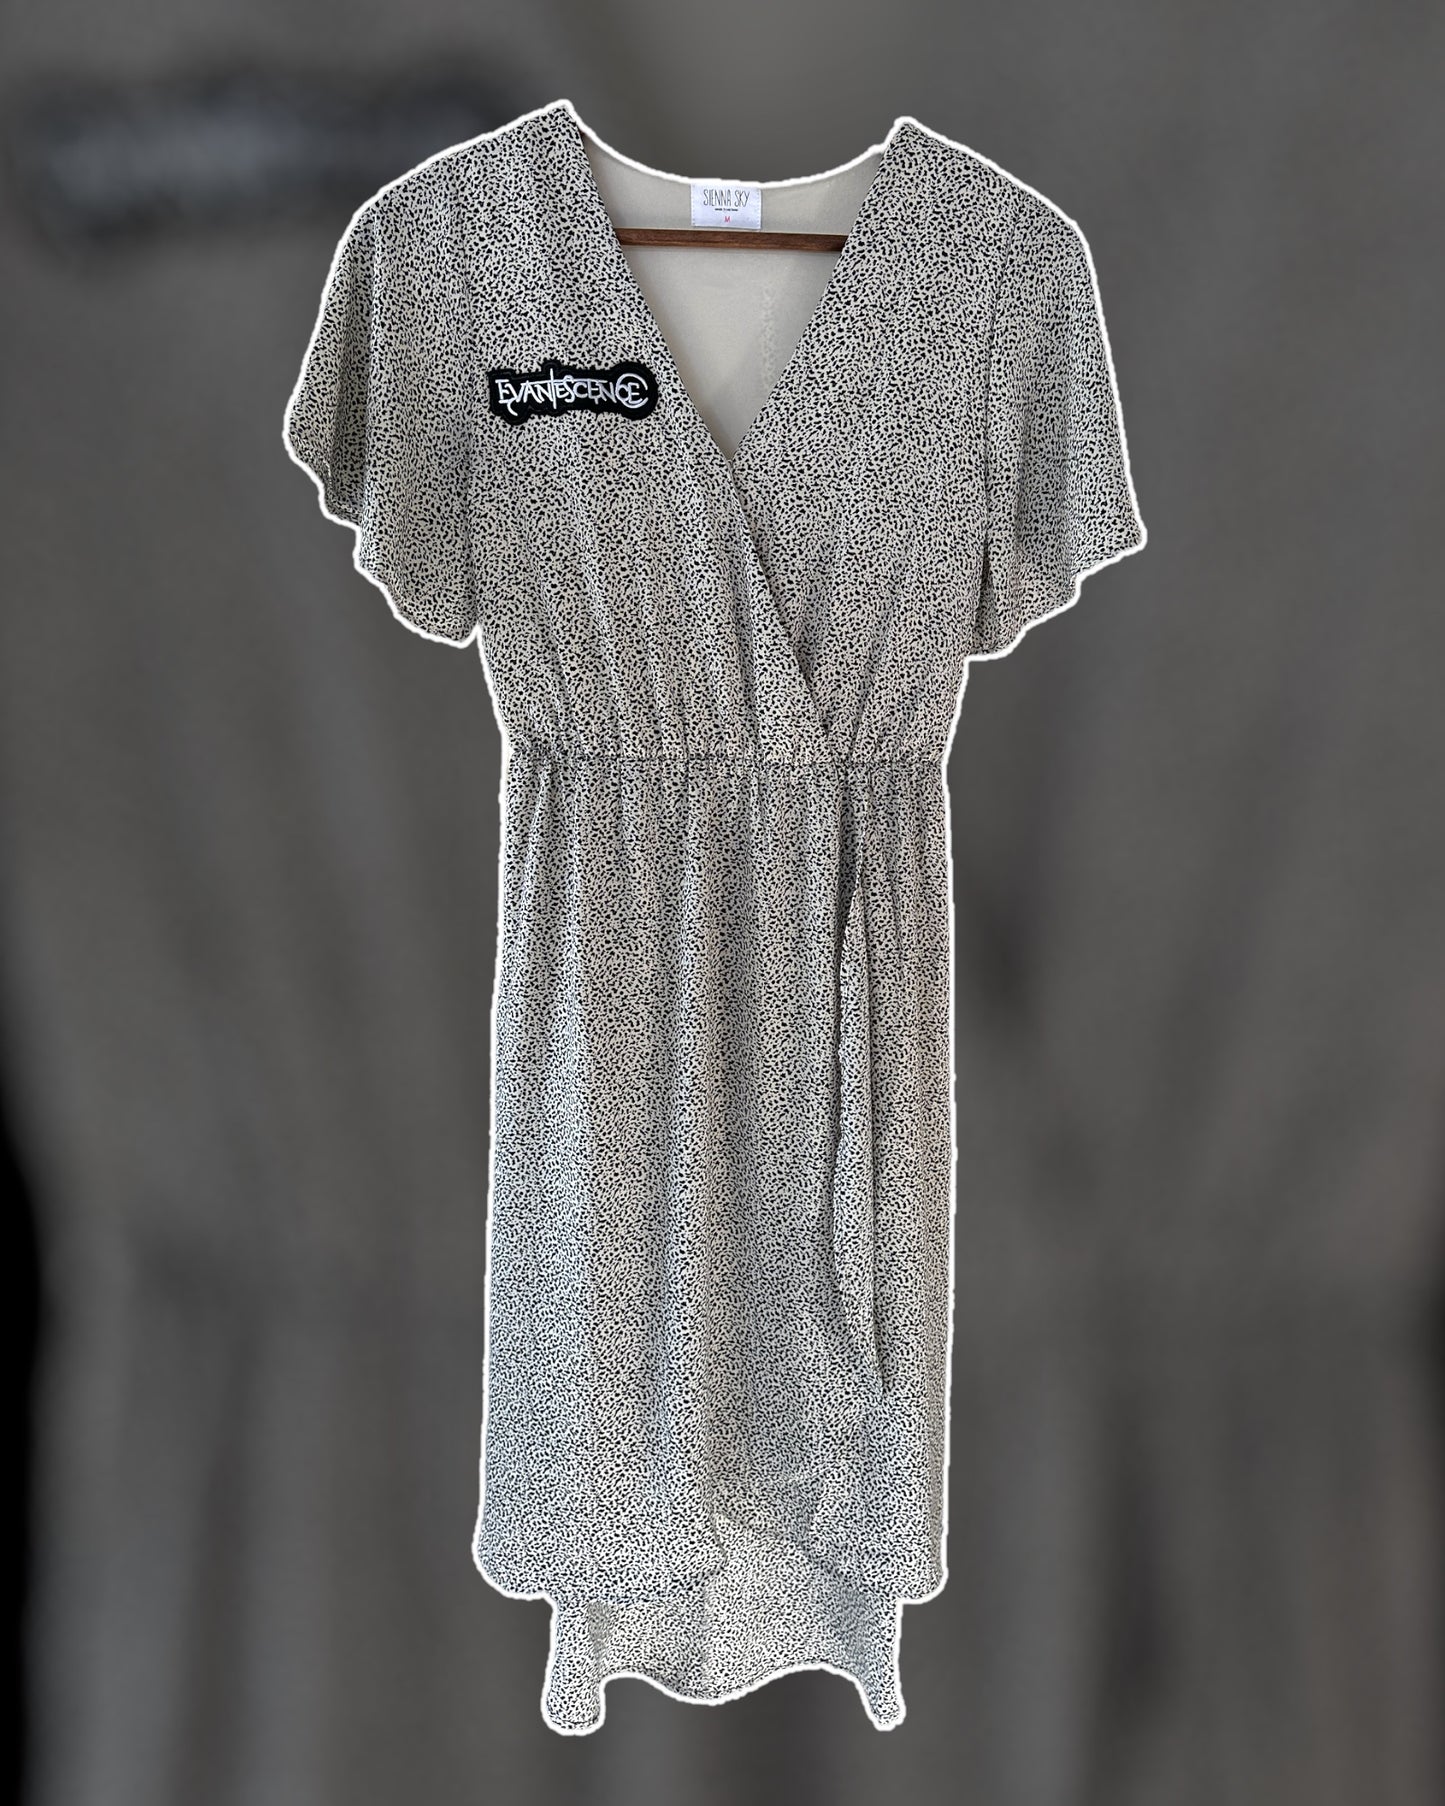 Evanescence Patch Dress Size Medium